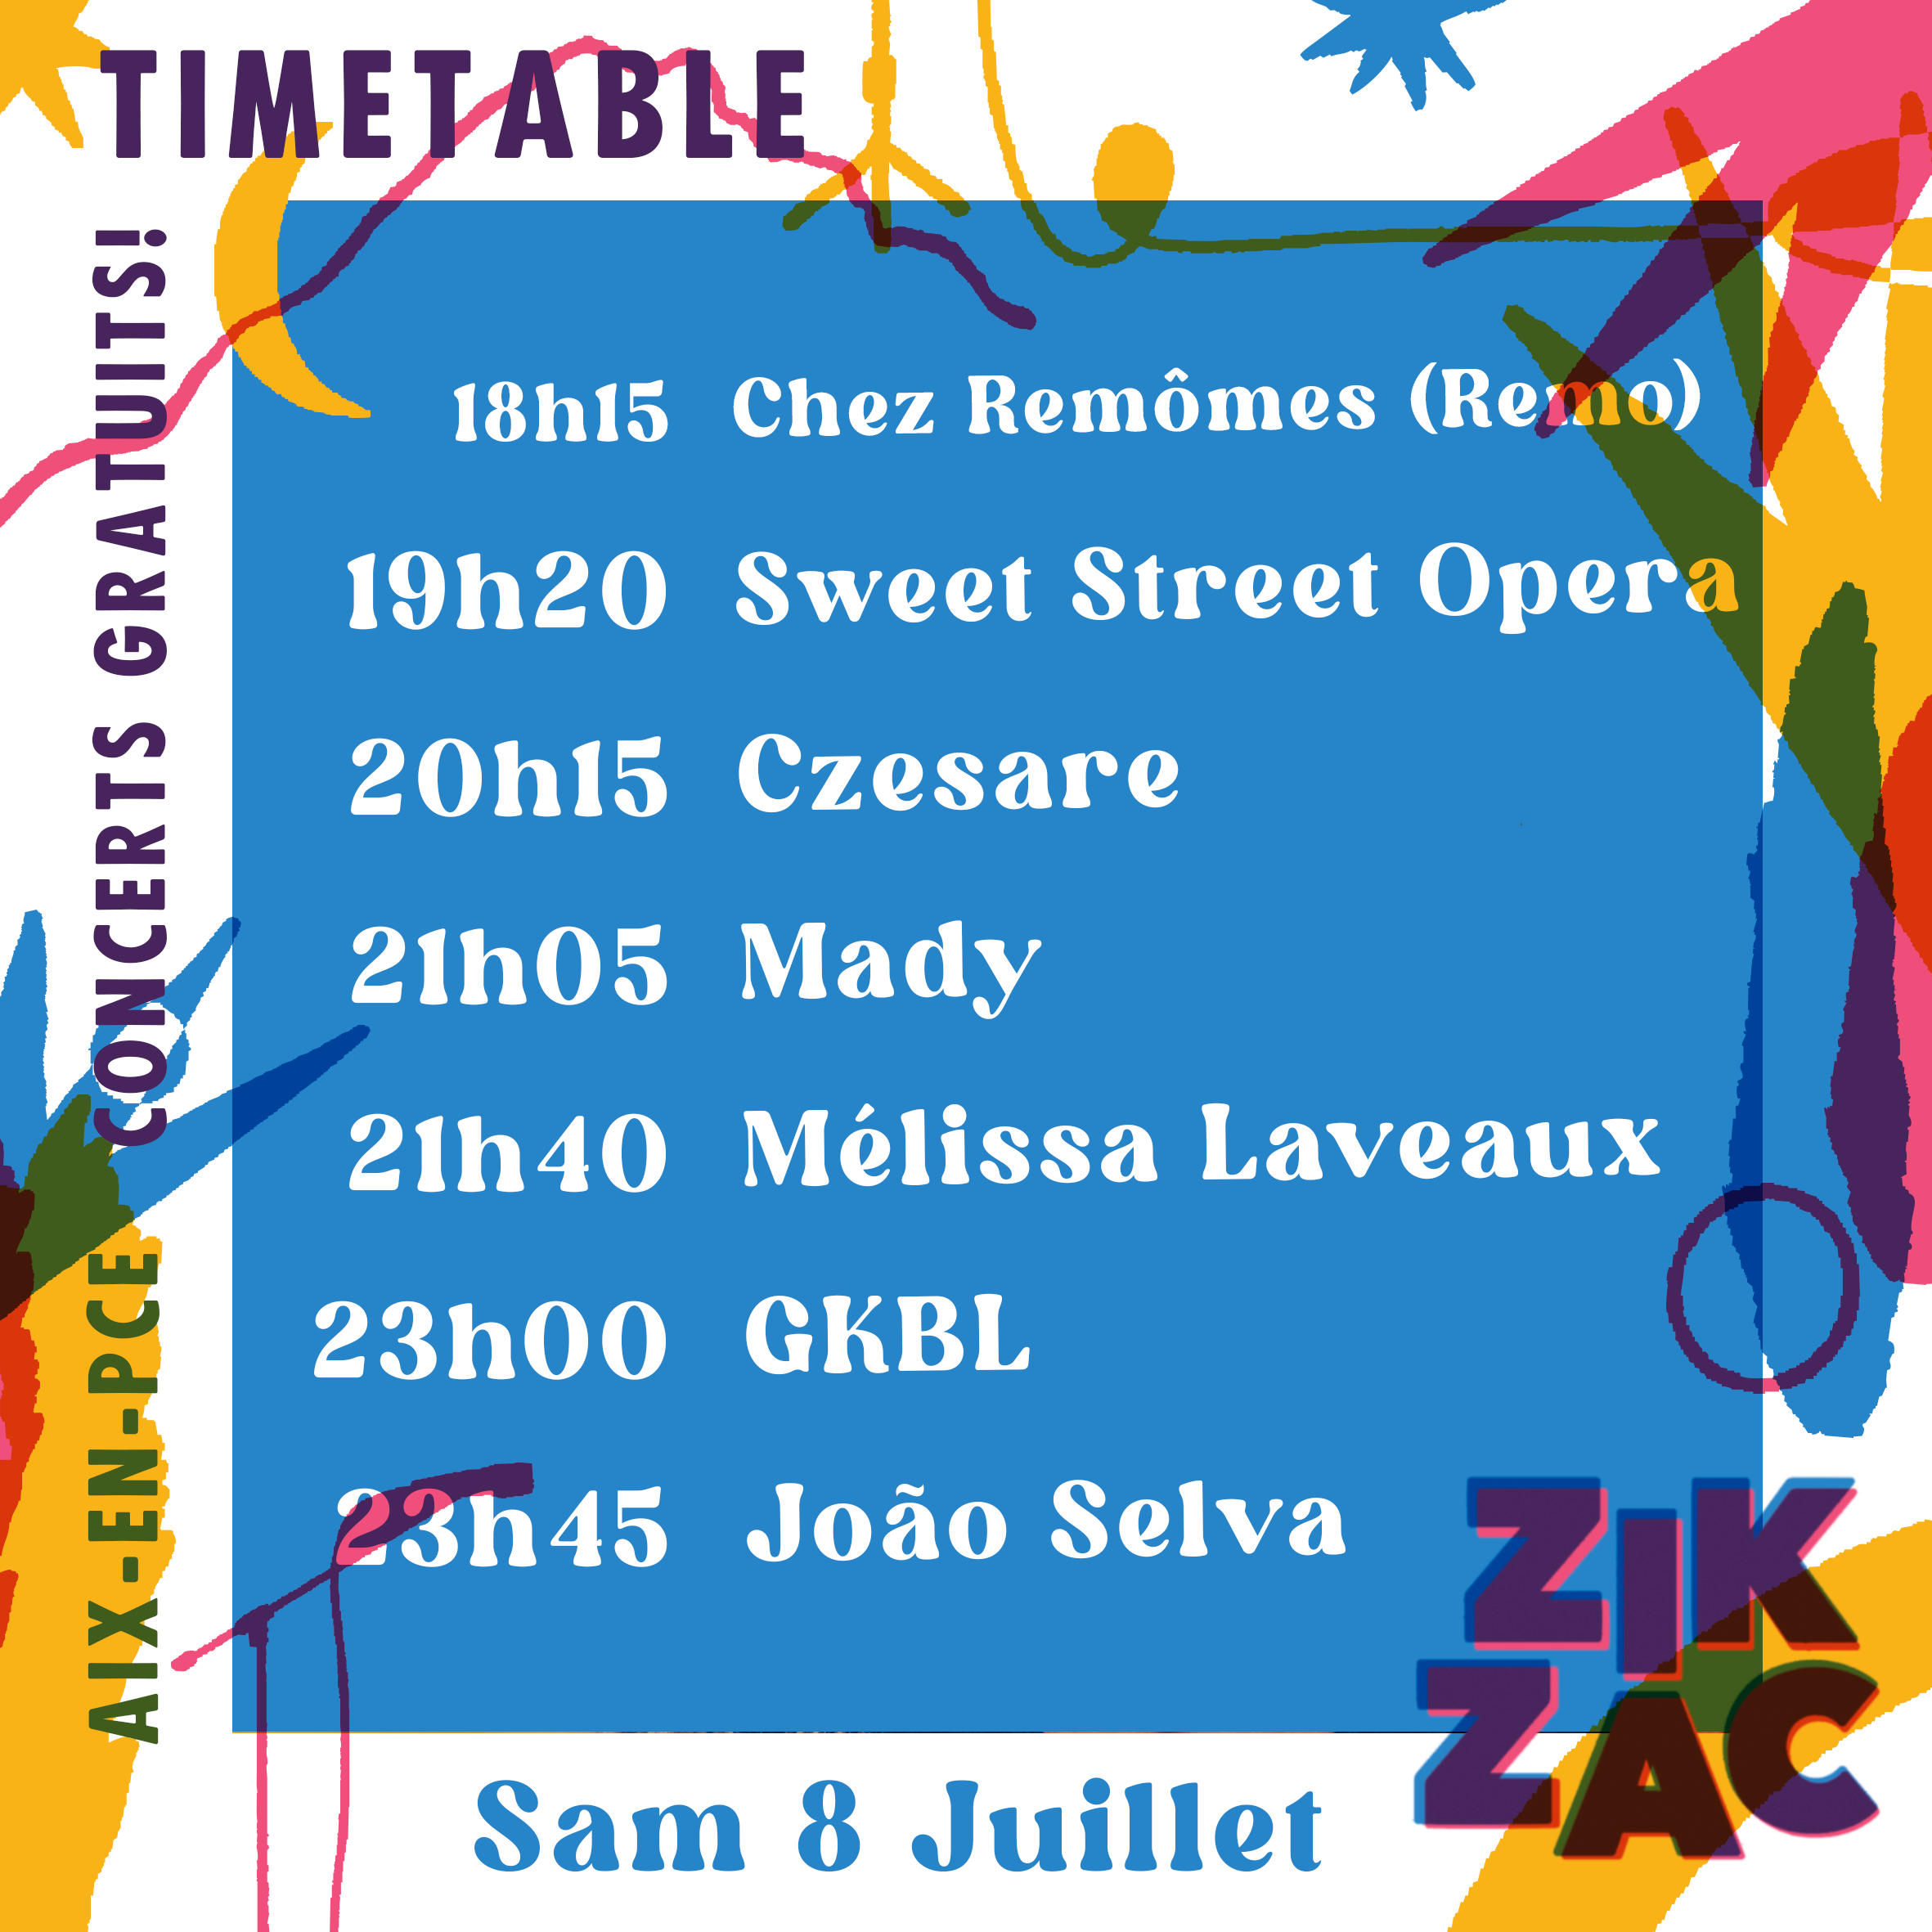 timetable-samedi